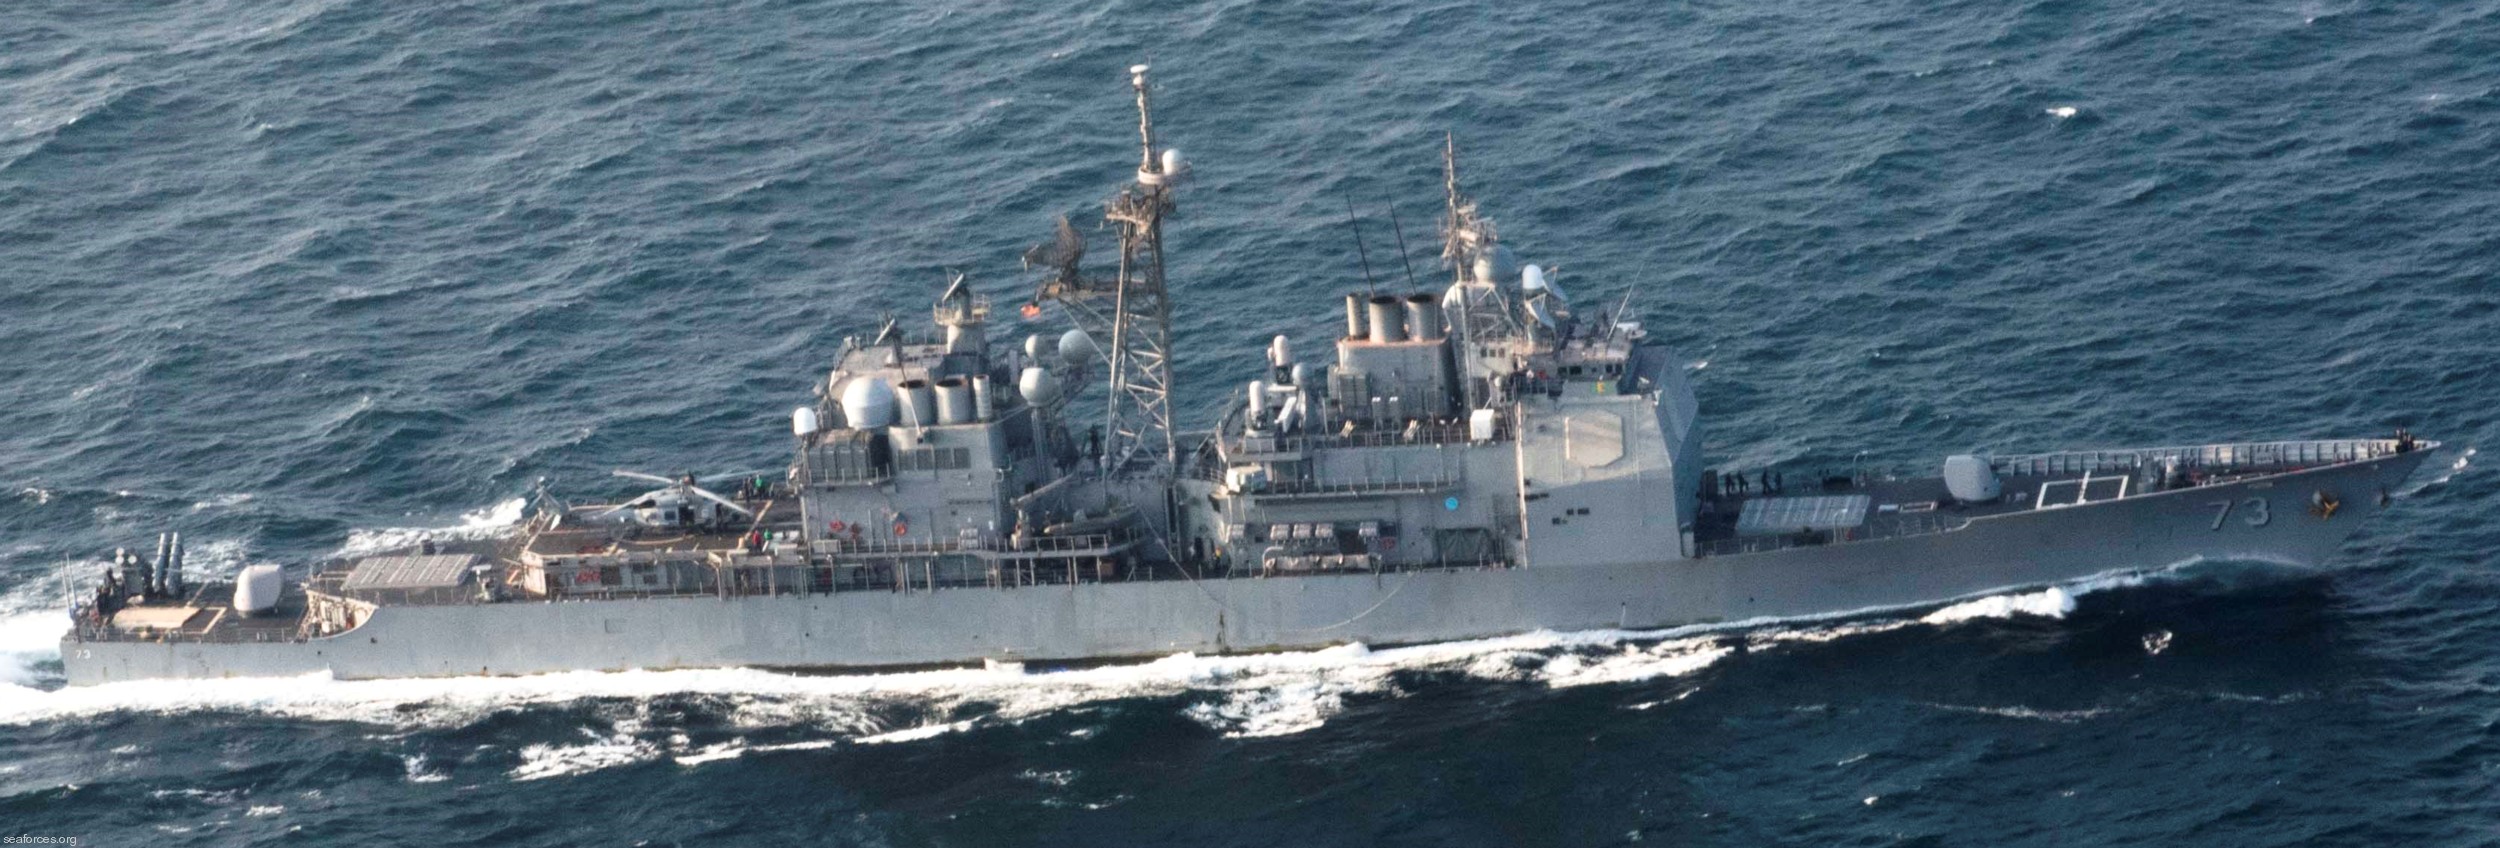 cg-73 uss port royal ticonderoga class guided missile cruiser navy 03 5th fleet aor